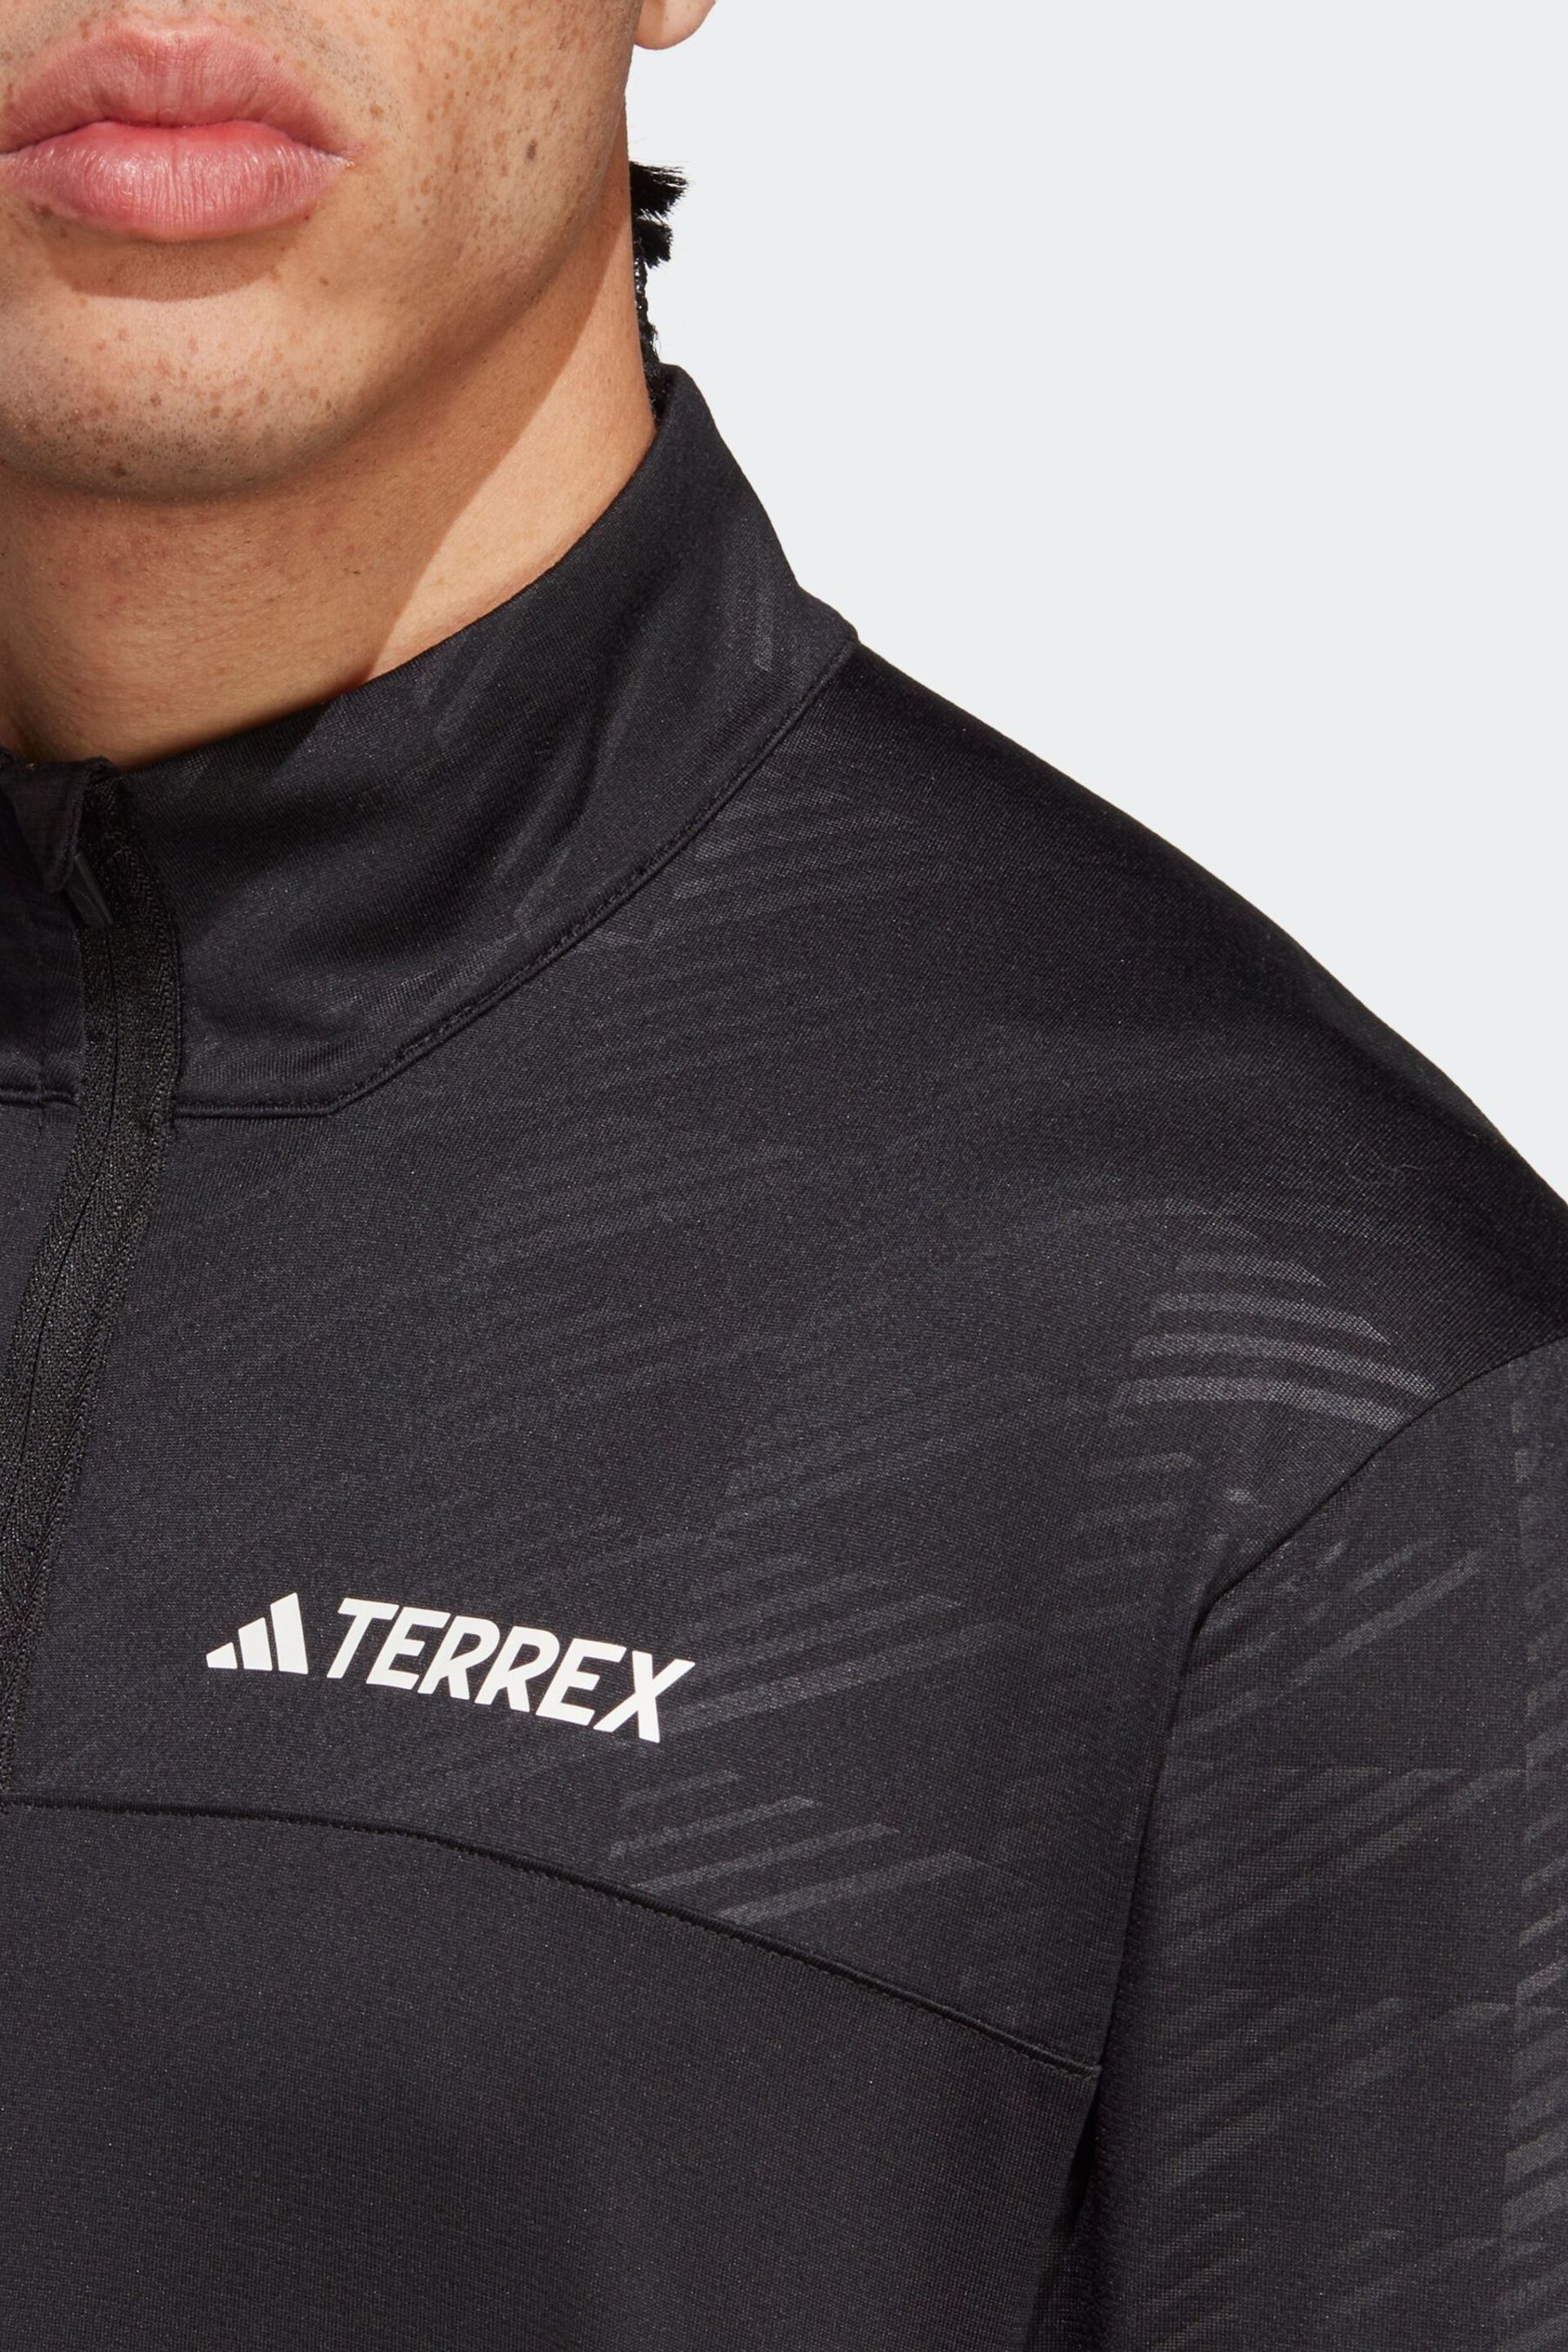 adidas Terrex Black Fleece - Image 5 of 8